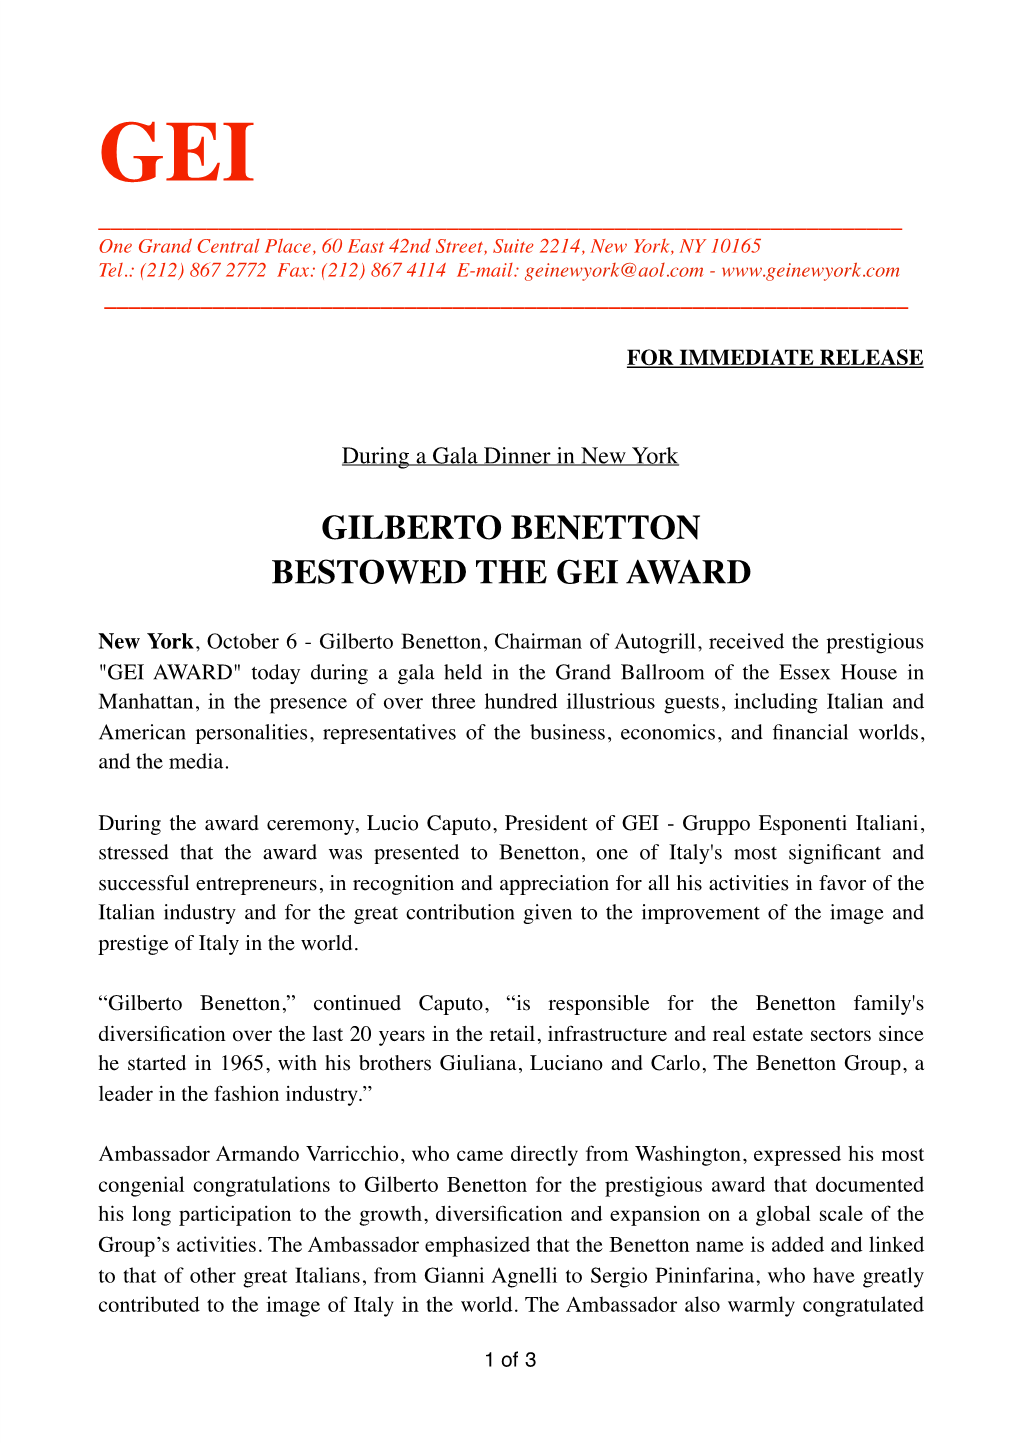 Gilberto Benetton Bestowed the Gei Award